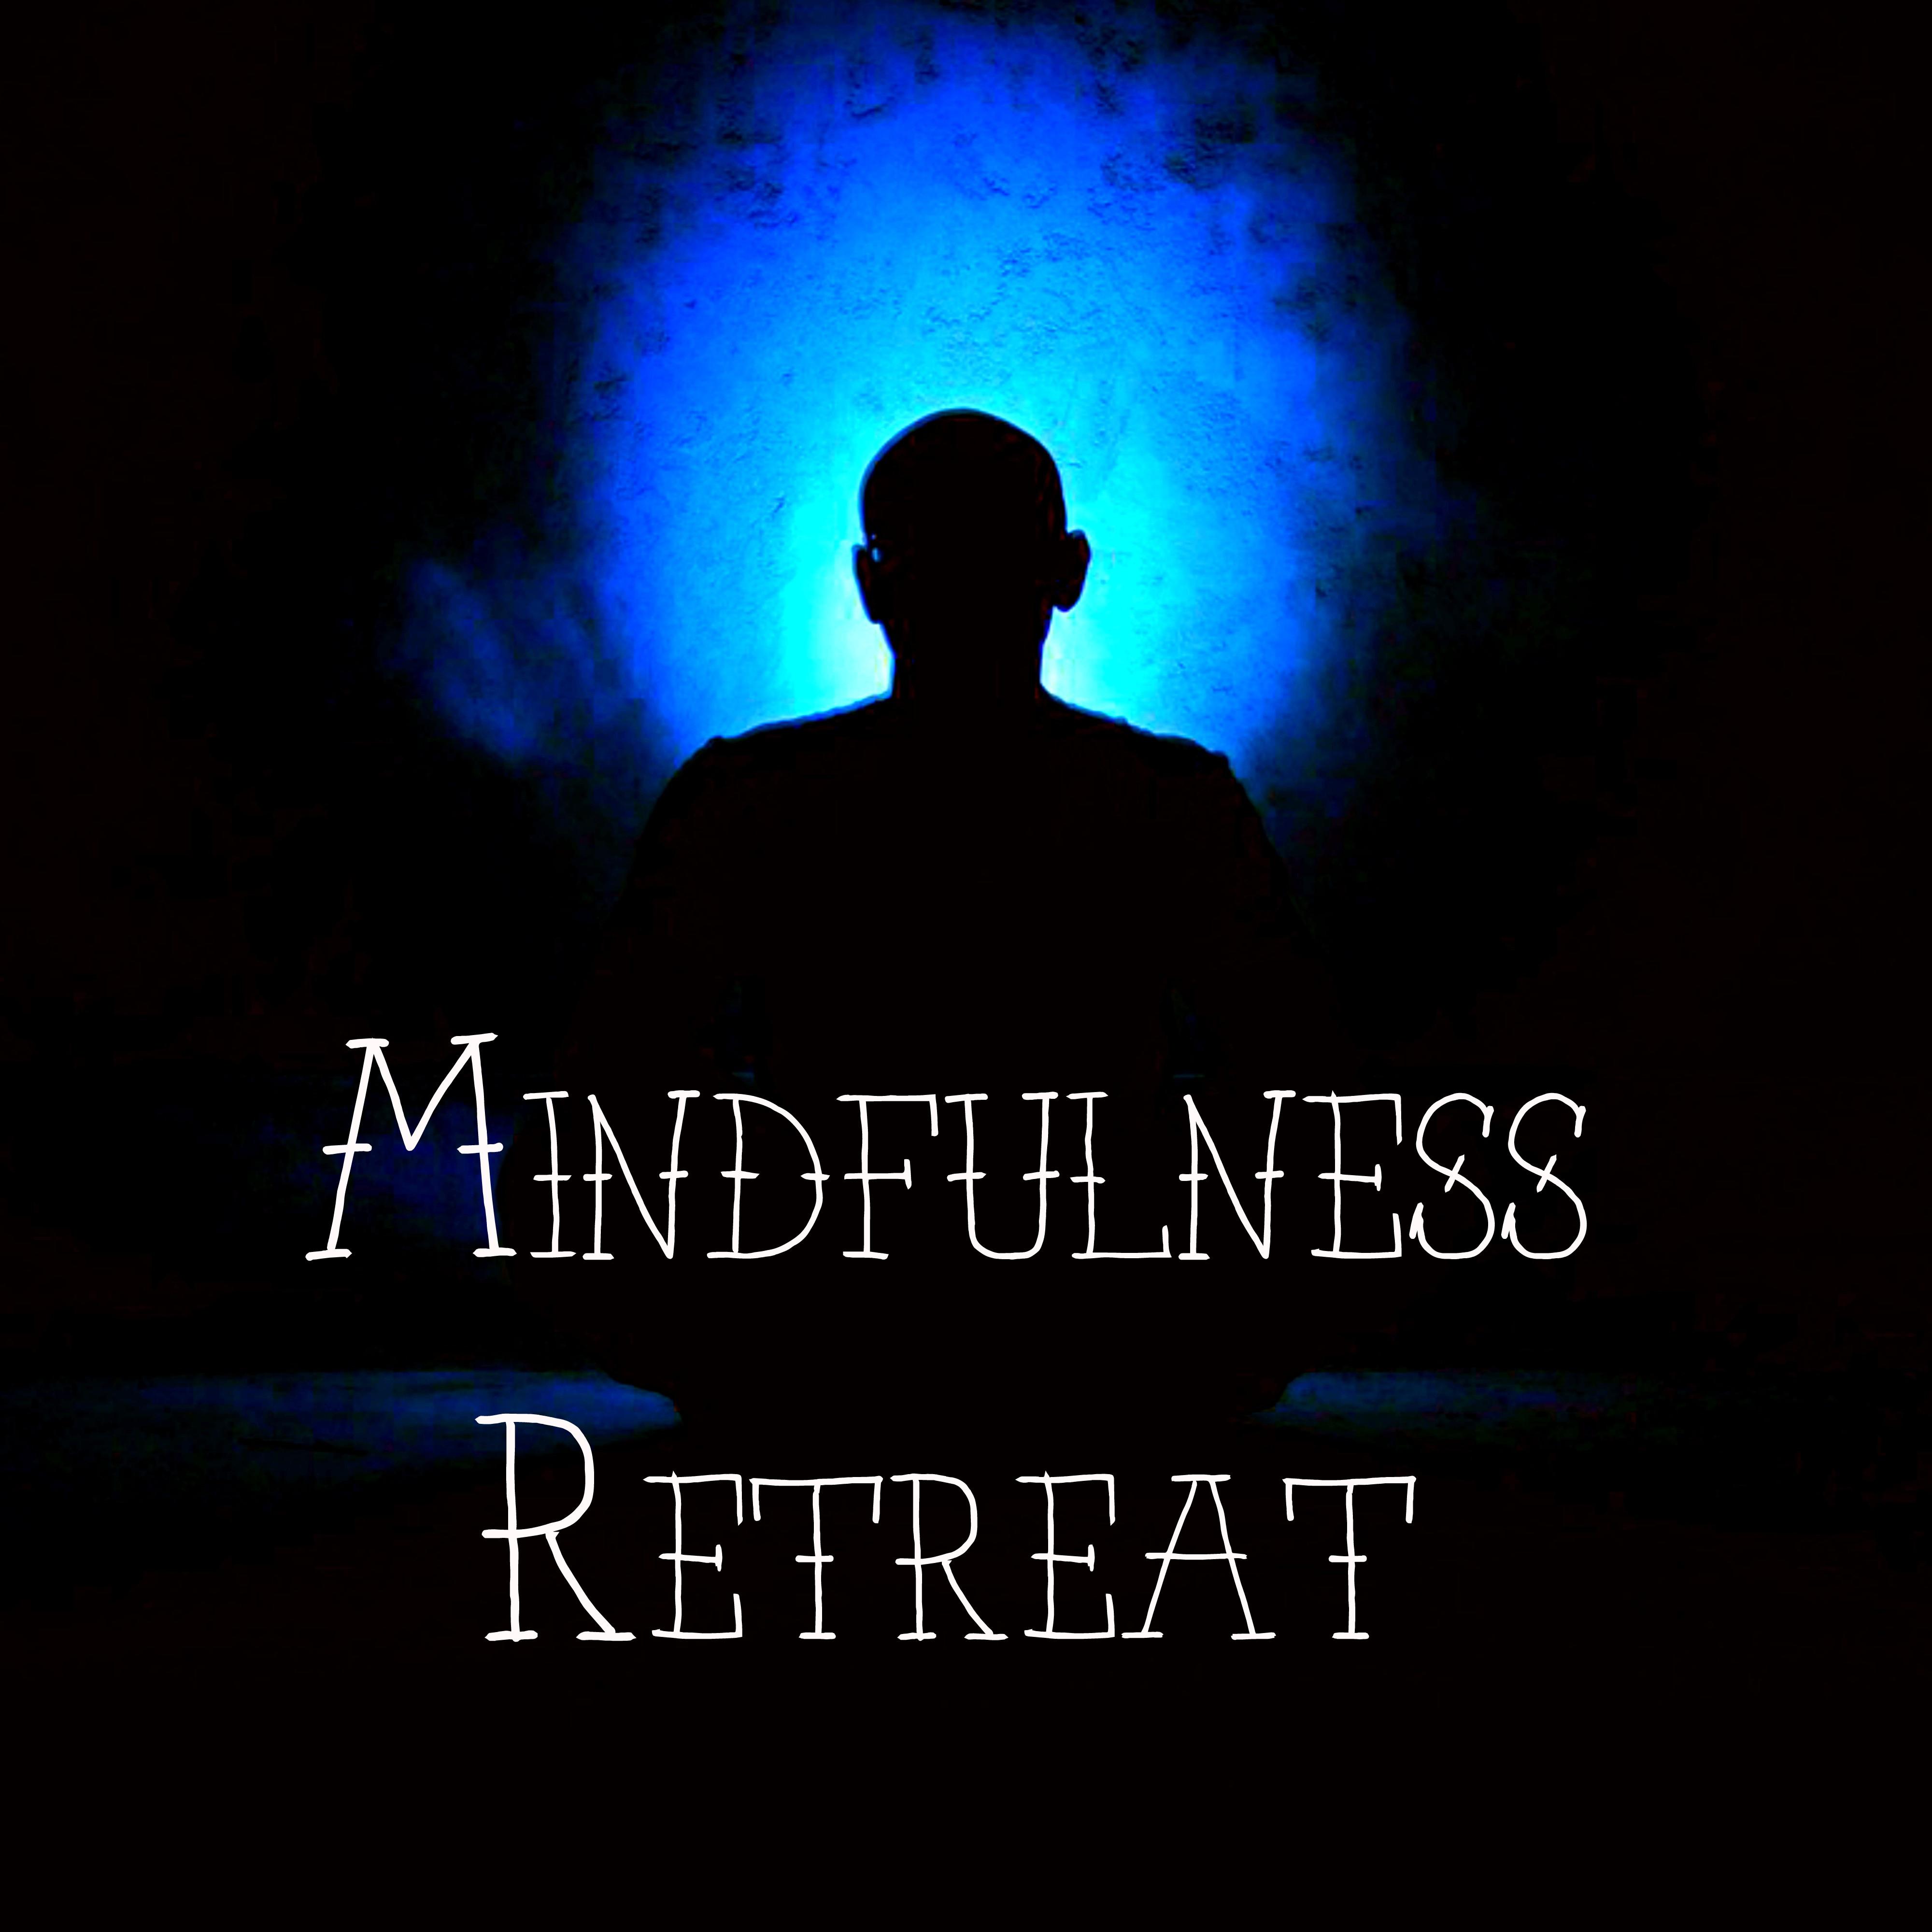 Mindfulness Retreat